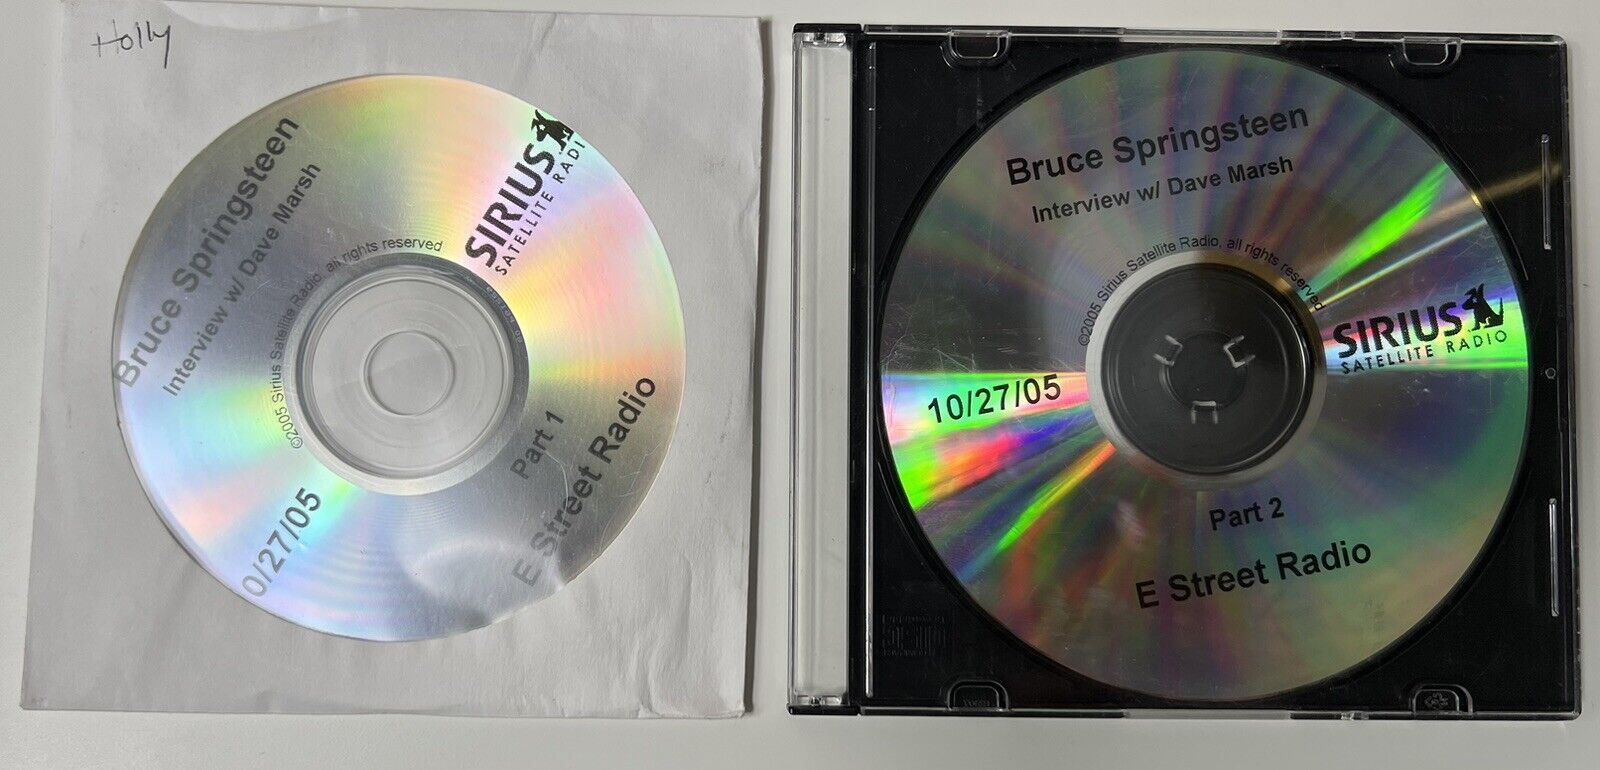 RARE Bruce Springsteen Interview 2xCD 10/27/05 Sirius Radio Dave Marsh E Street